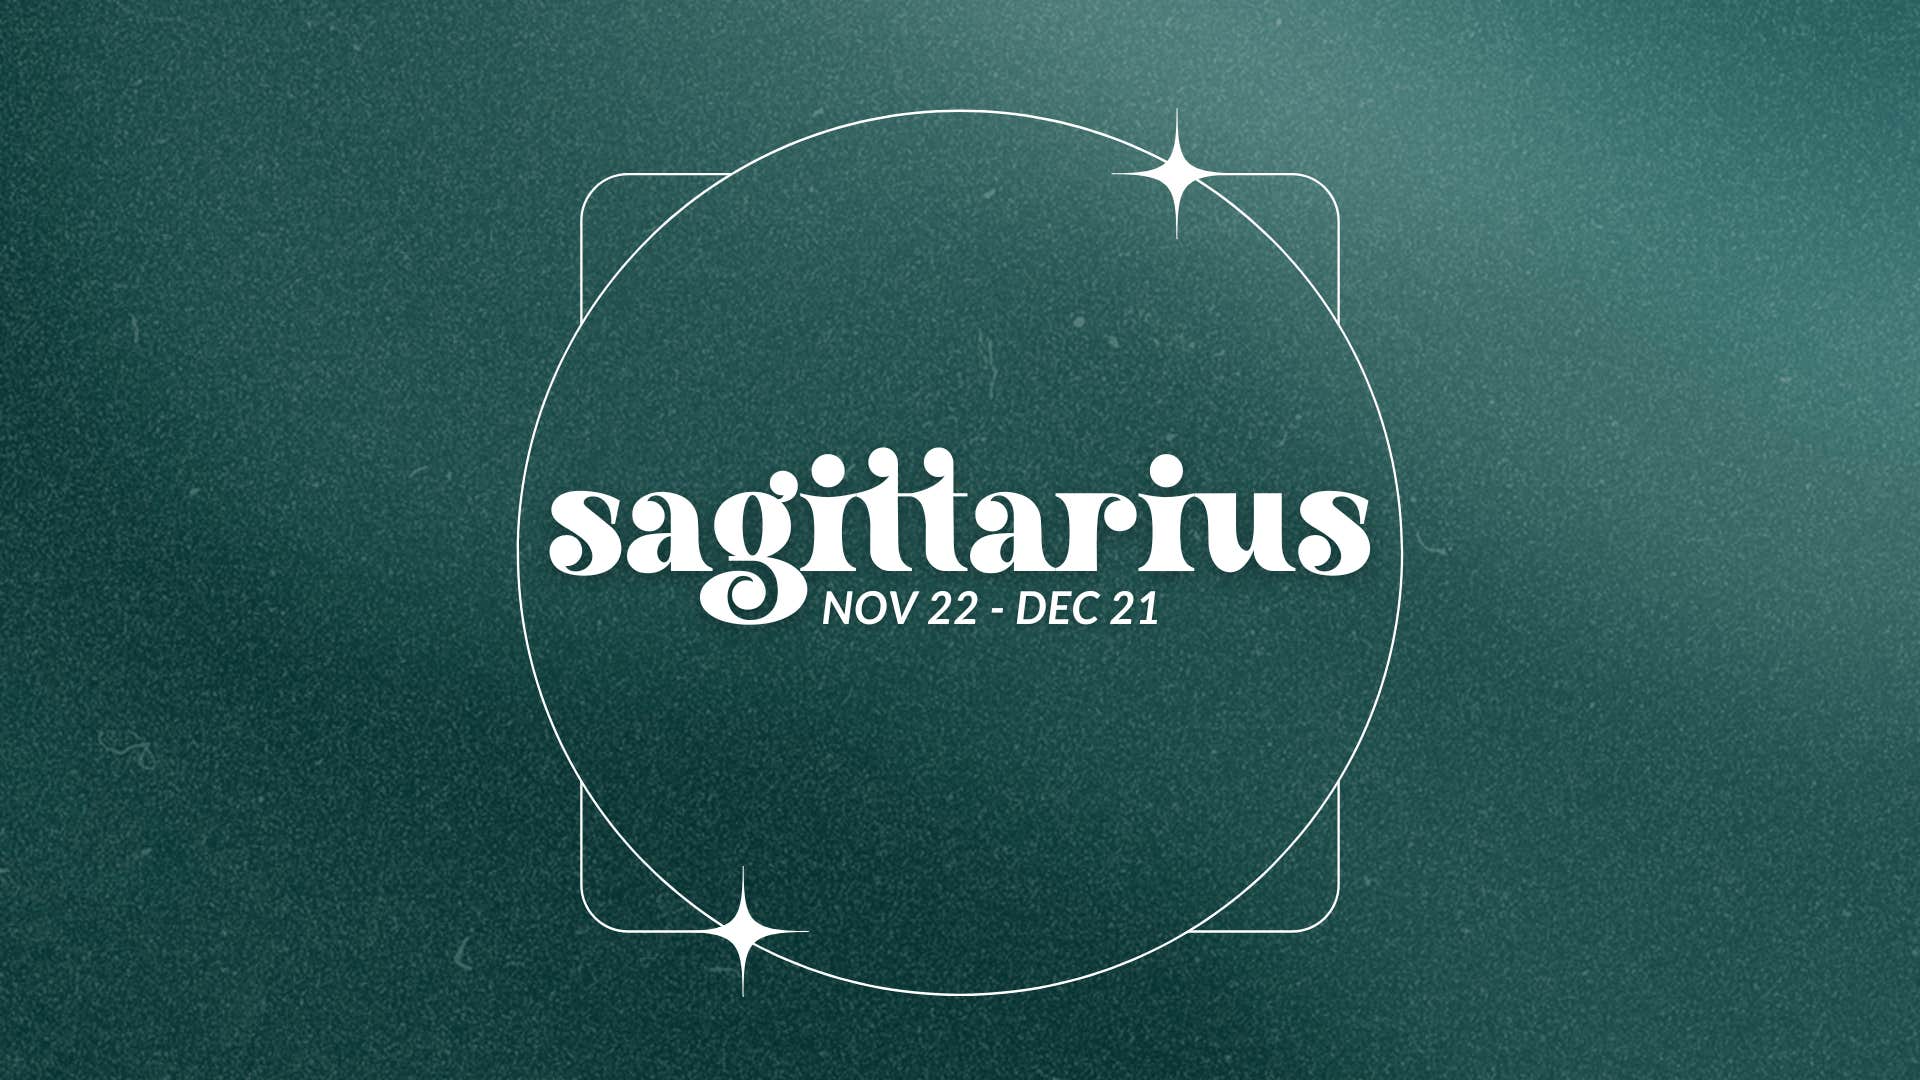 romantic gesture that makes sagittarius swoon